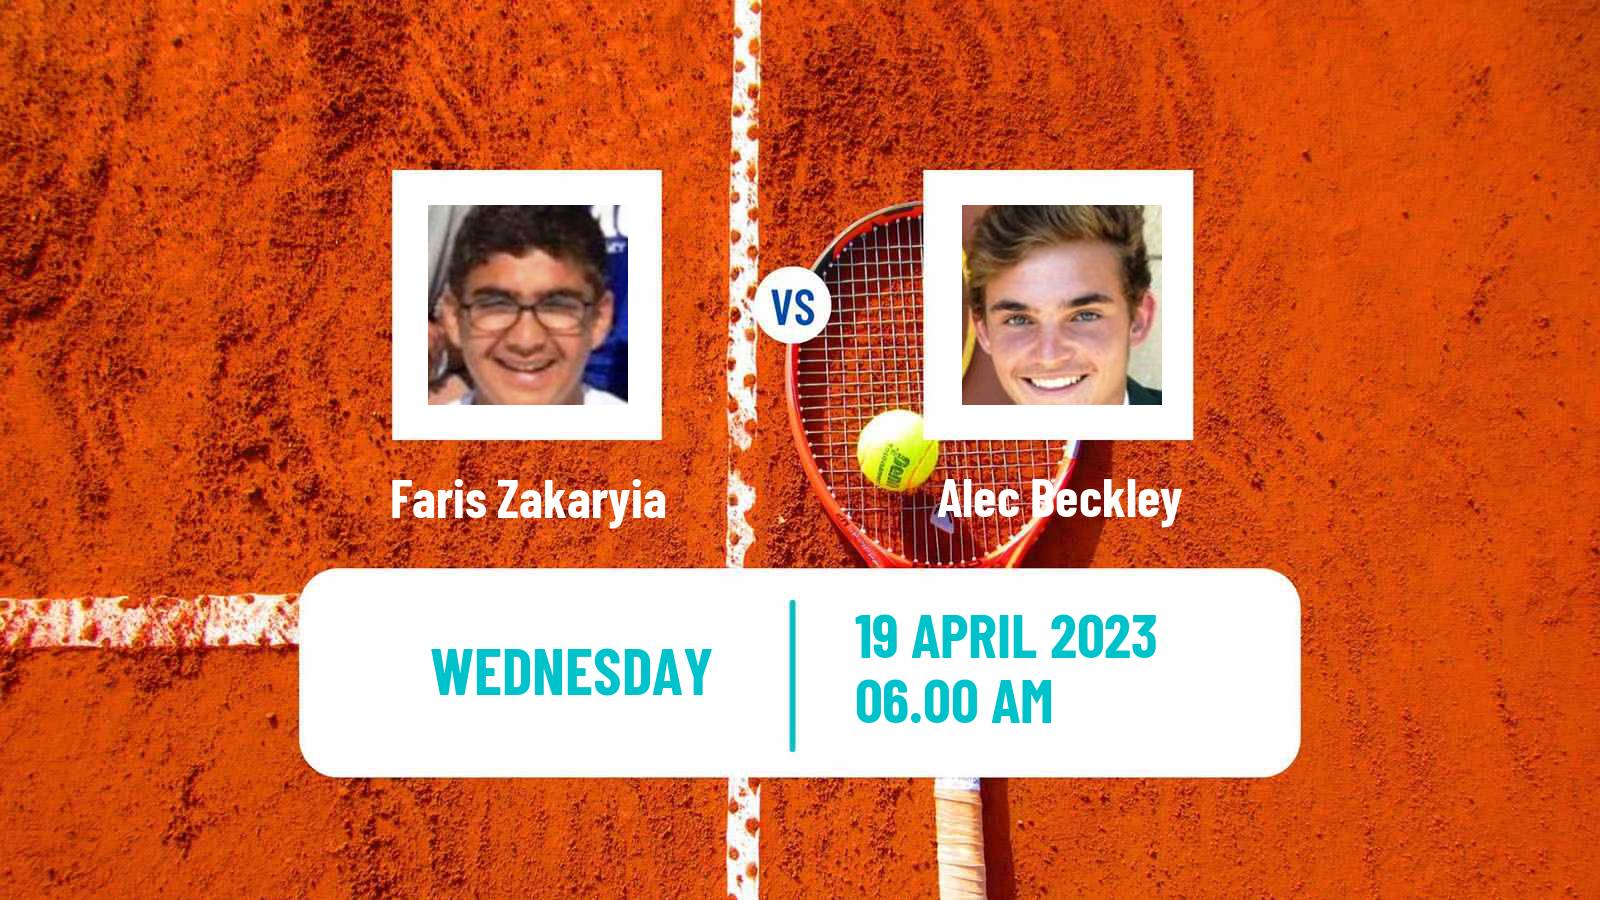 Tennis ITF Tournaments Faris Zakaryia - Alec Beckley